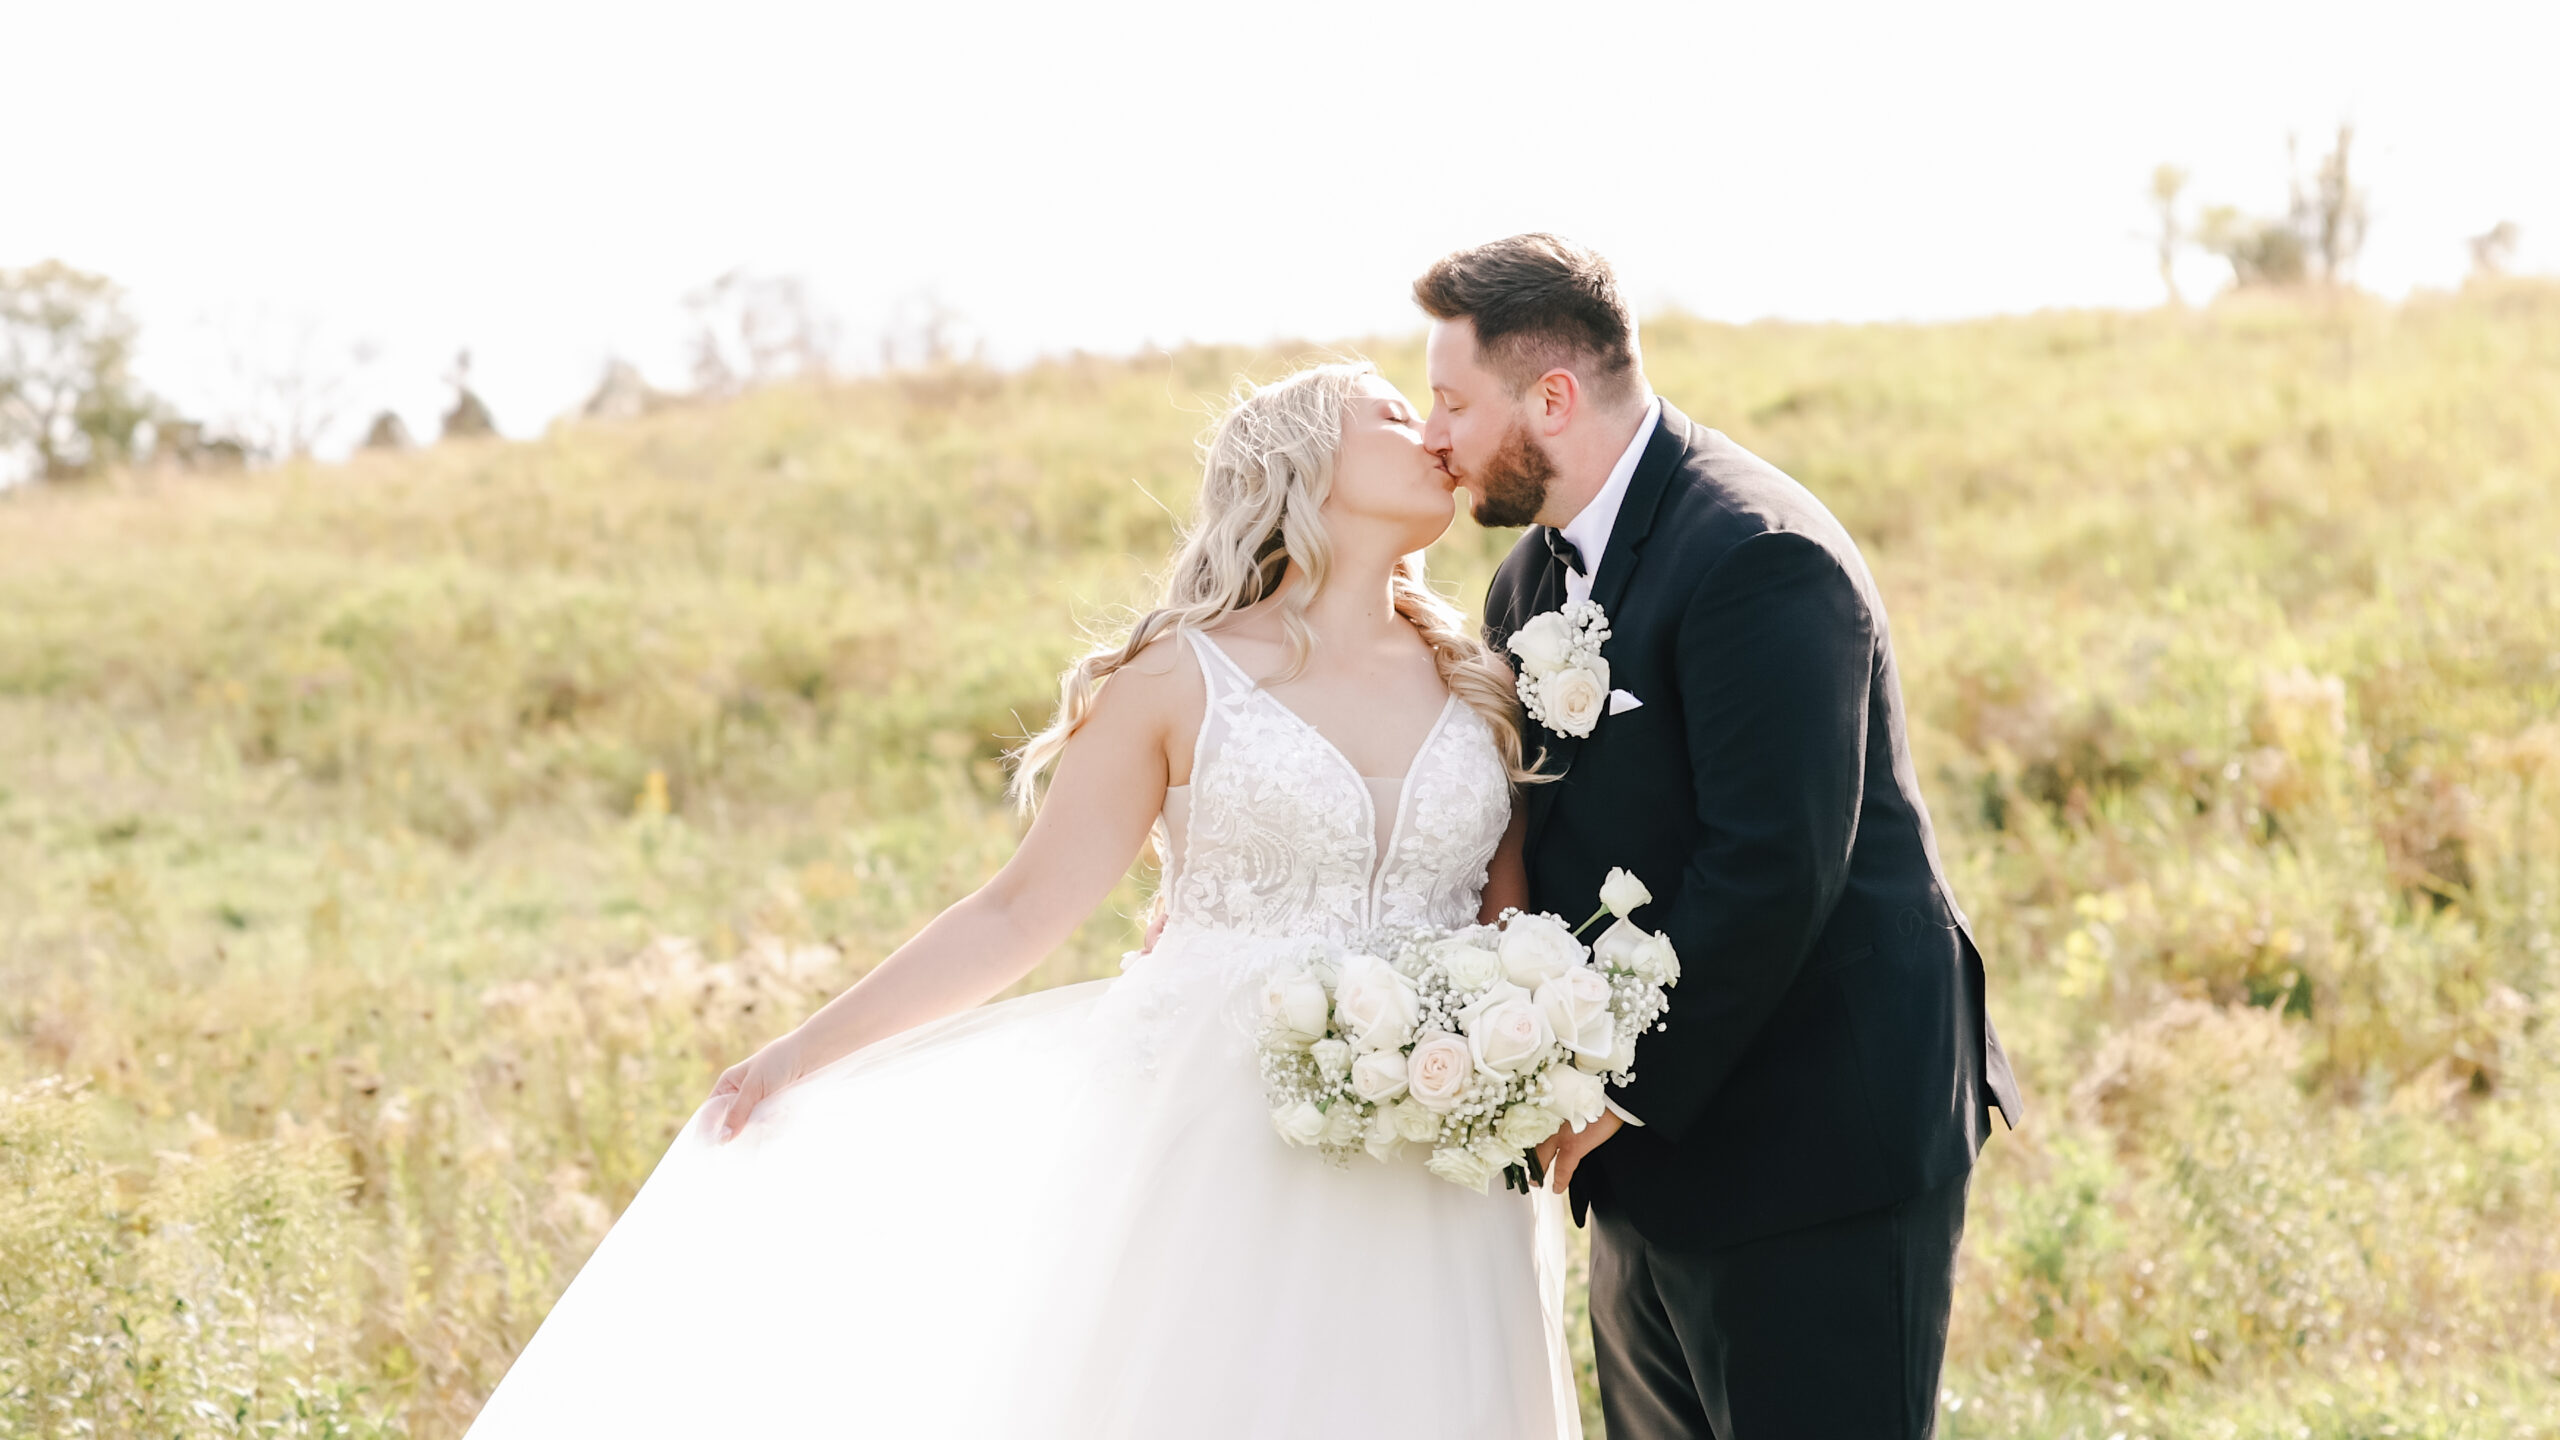 The Eloise Wedding Video | Mt Horeb, Wisconsin Wedding Venue | Mt Horeb Wedding Videographer Chaviano Creative